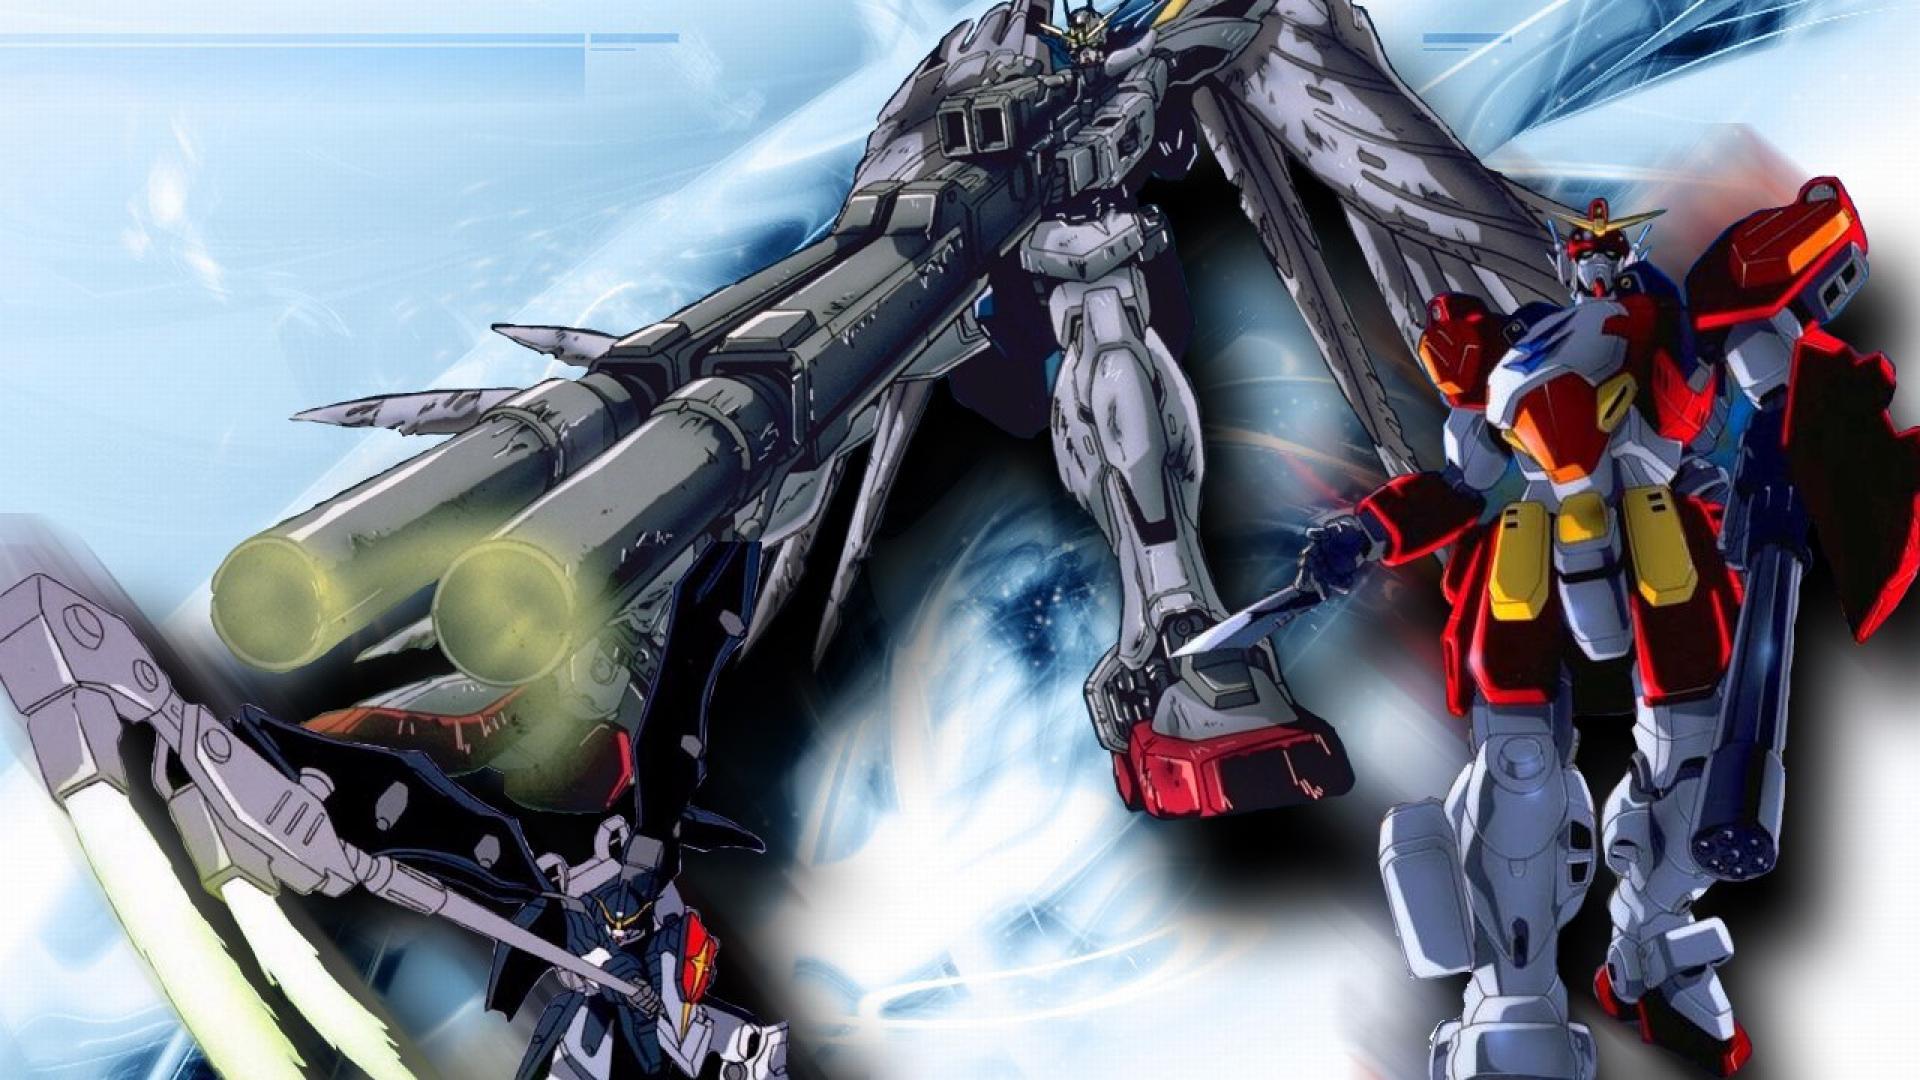 Gundam wallpaper free Download